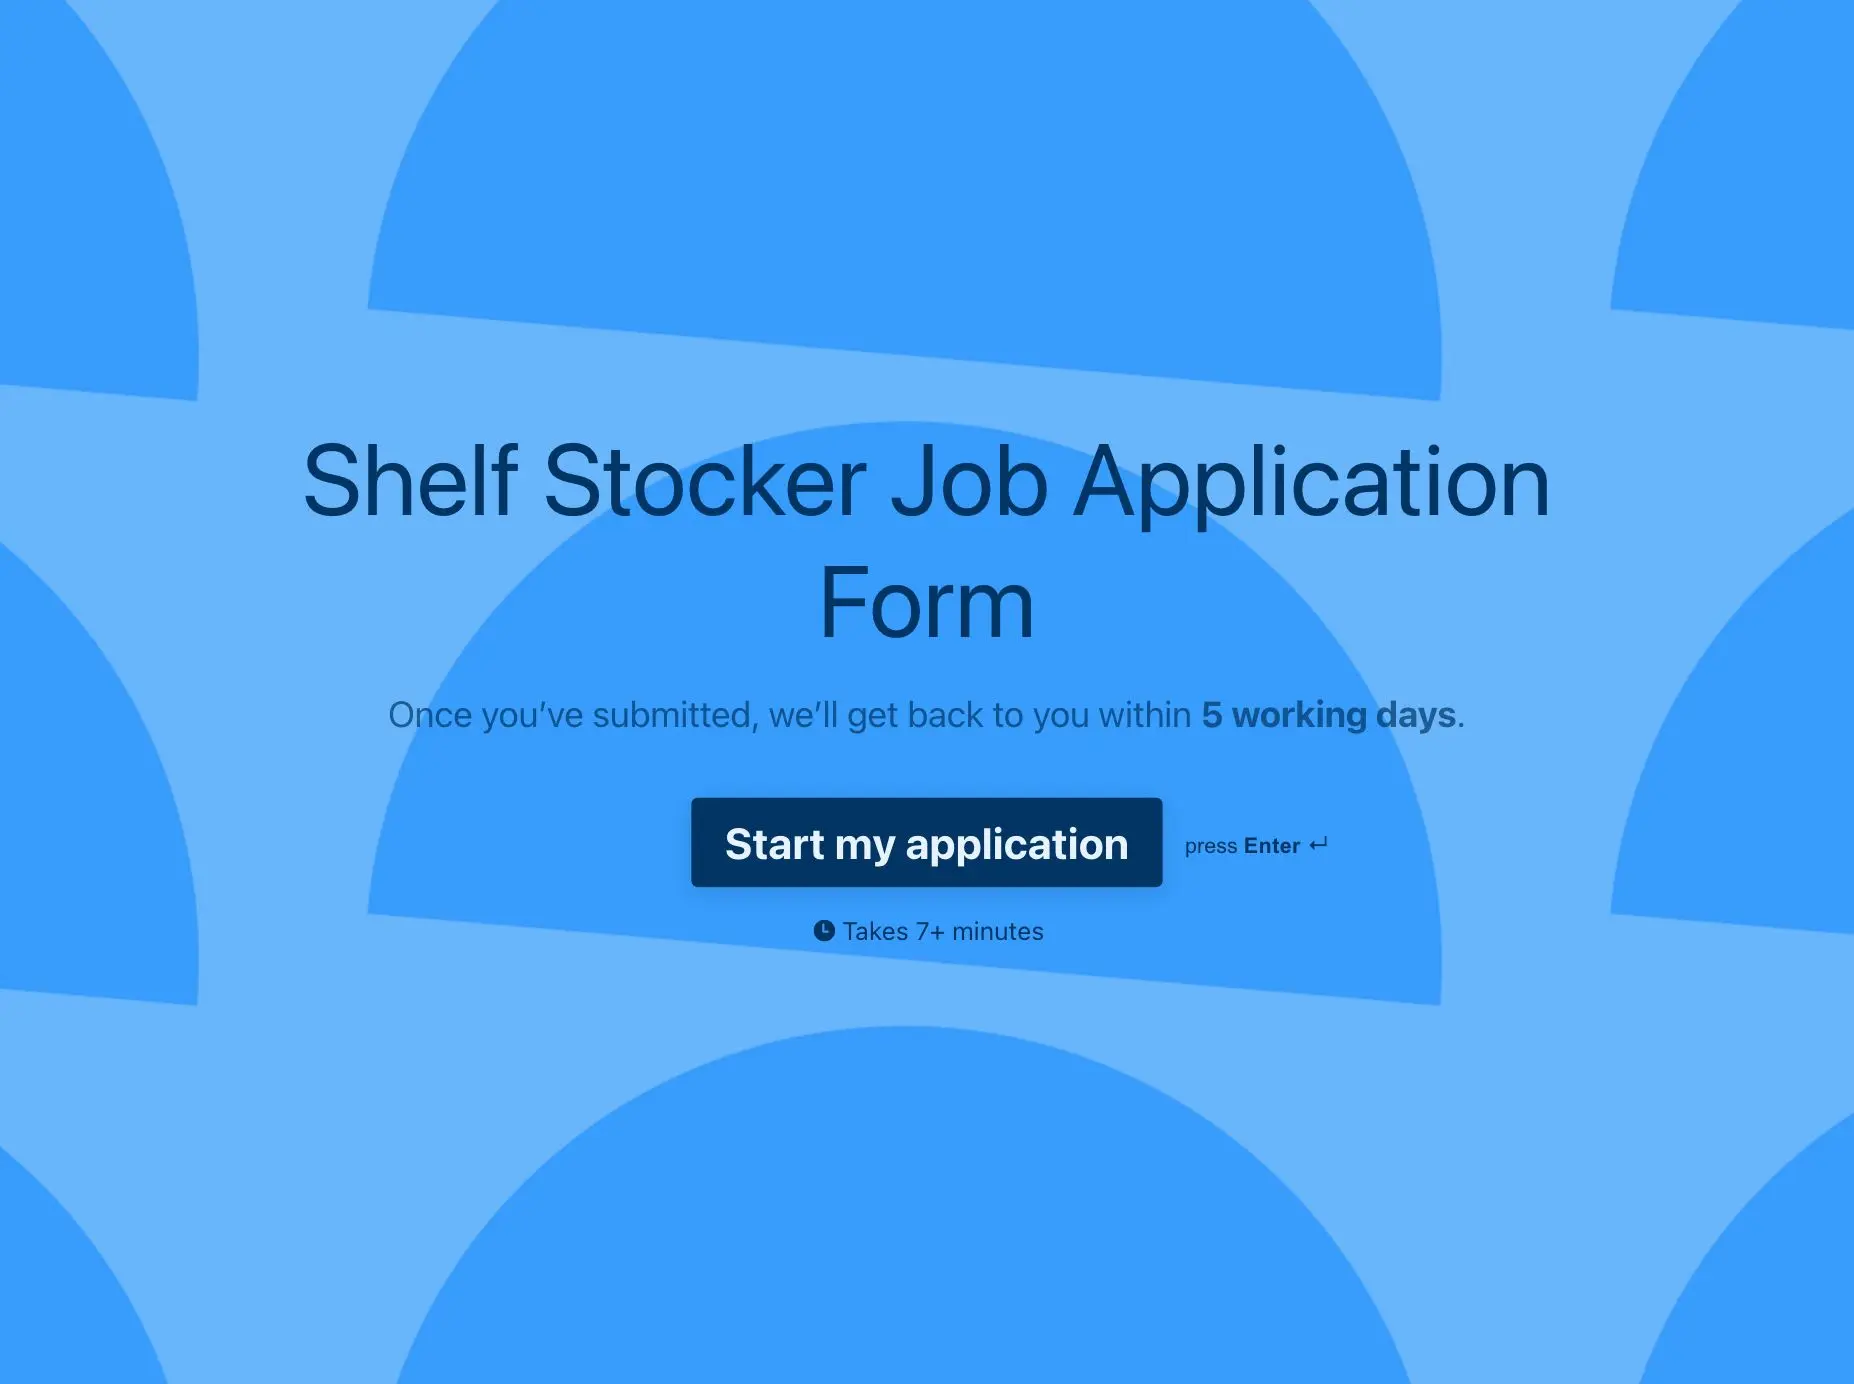 Shelf Stocker Job Application Form Template Hero